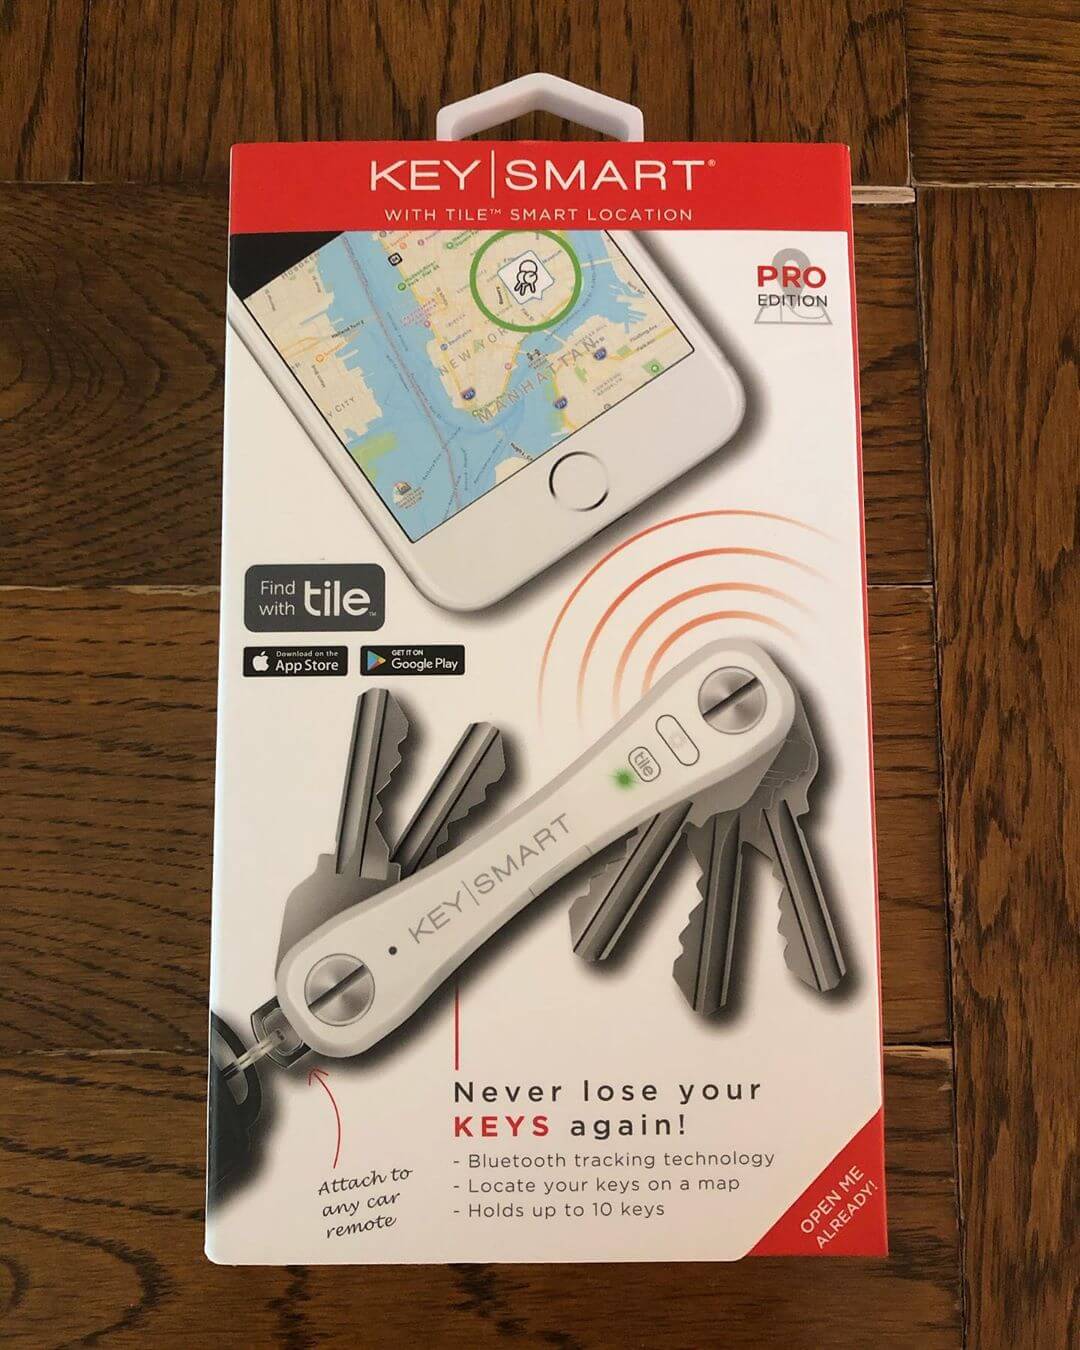 Porte-clés Keysmart : test & avis